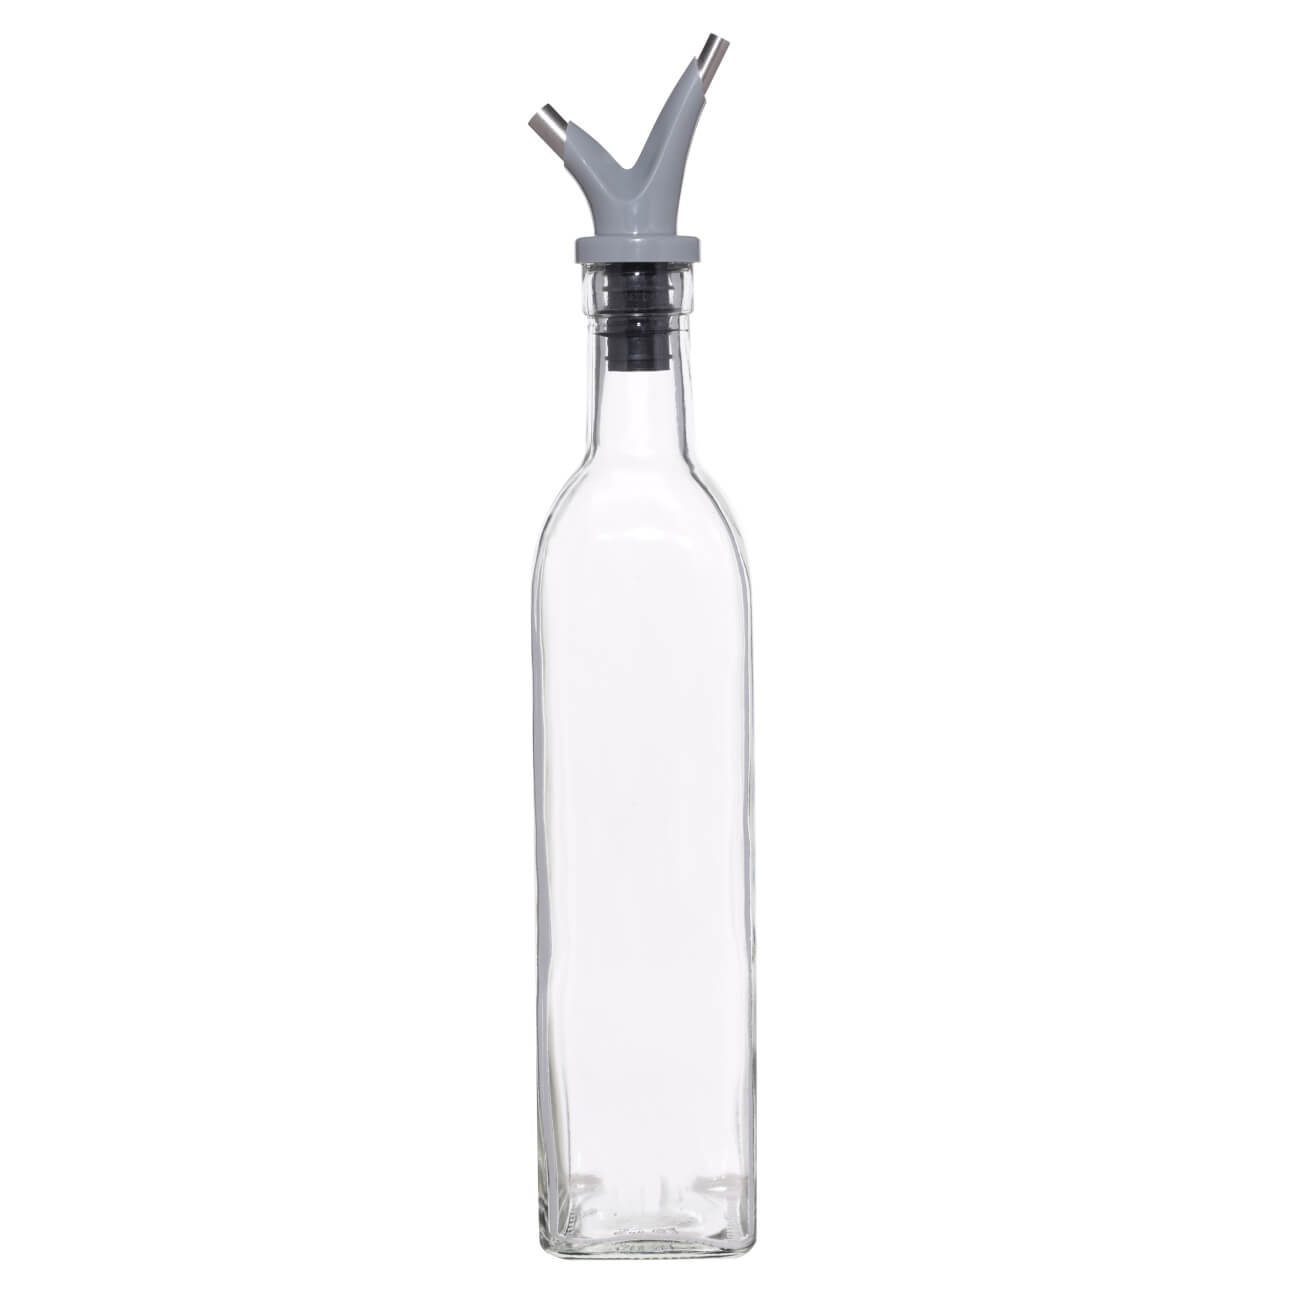 бутылка для масла уксуса mallony 500мл стеклянная с дозатором 103806 Бутылка для масла или уксуса, 500 мл, с двойным дозатором, стекло/пластик, Assist